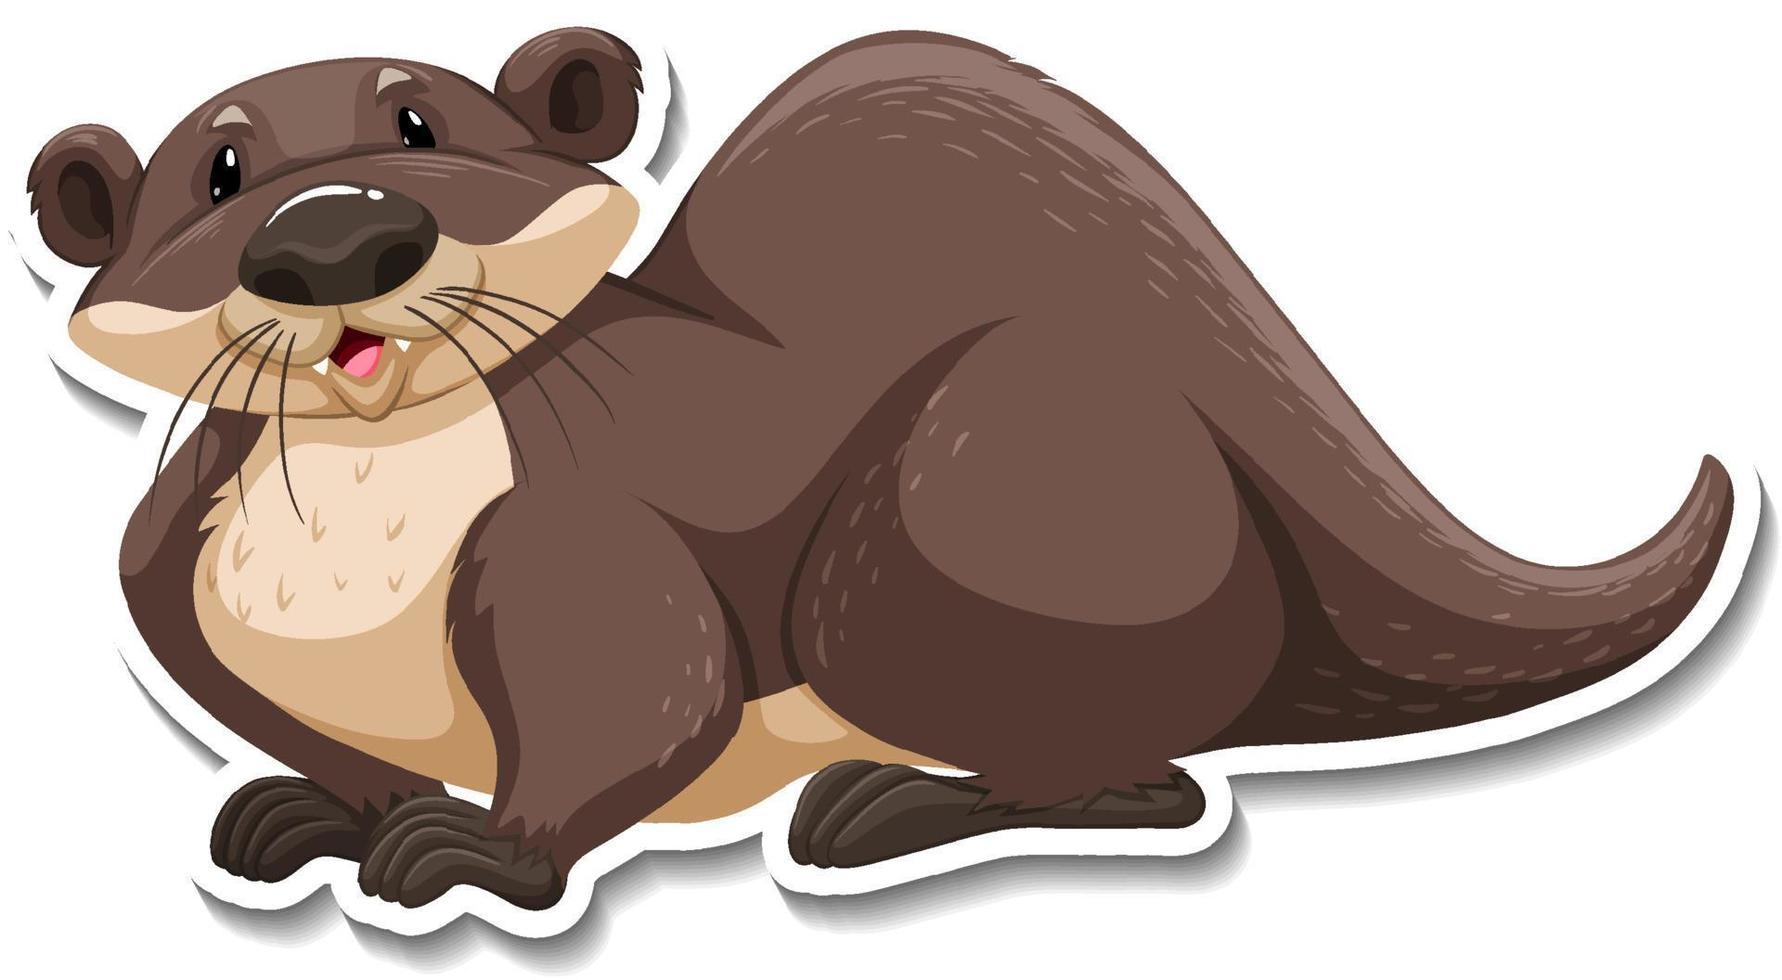 Cute otter wild animal cartoon sticker vector